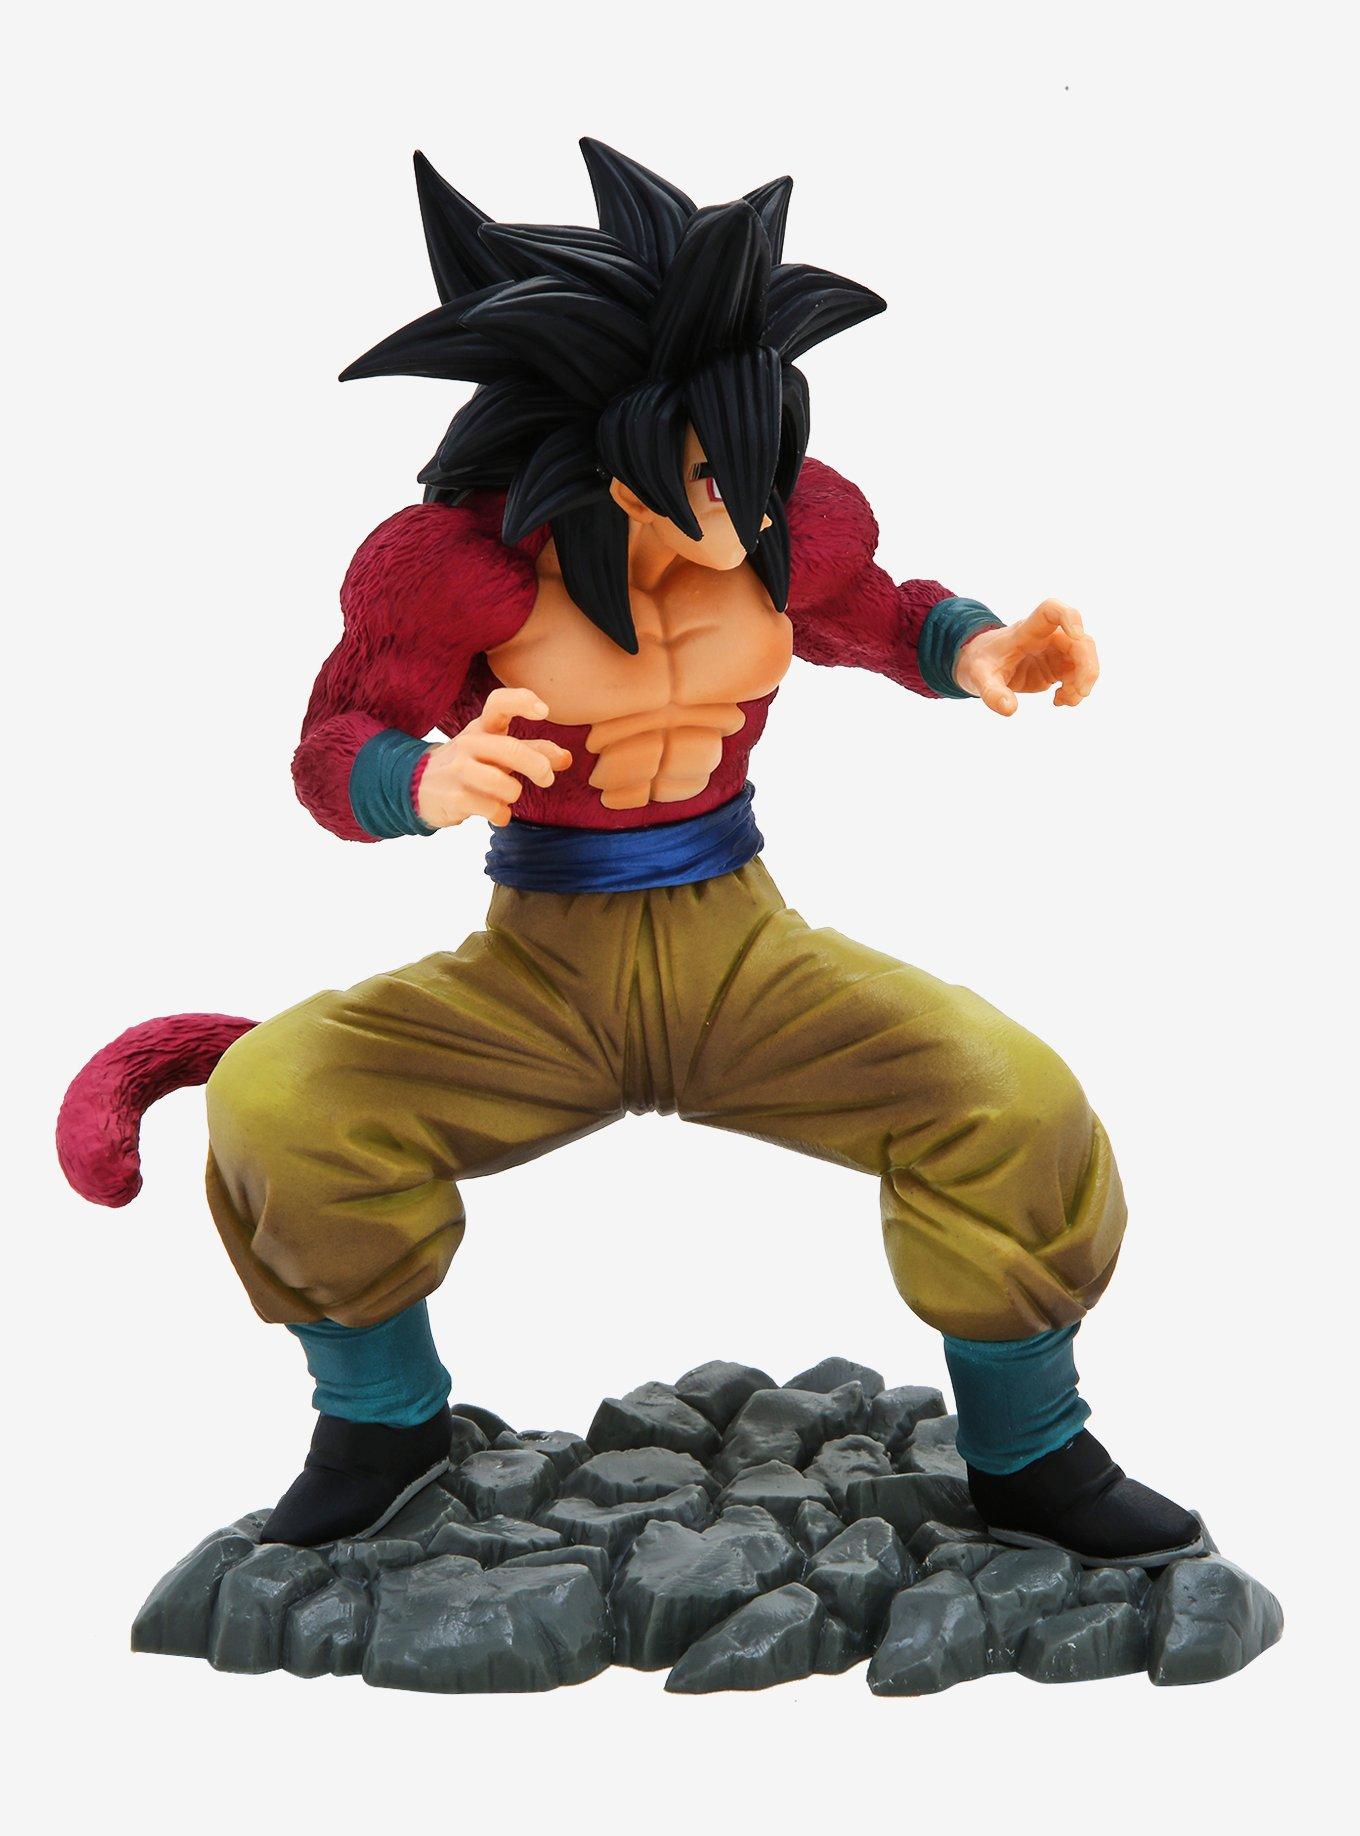 Just got this amazing super saiyan 4 Goku figure! : r/dbz